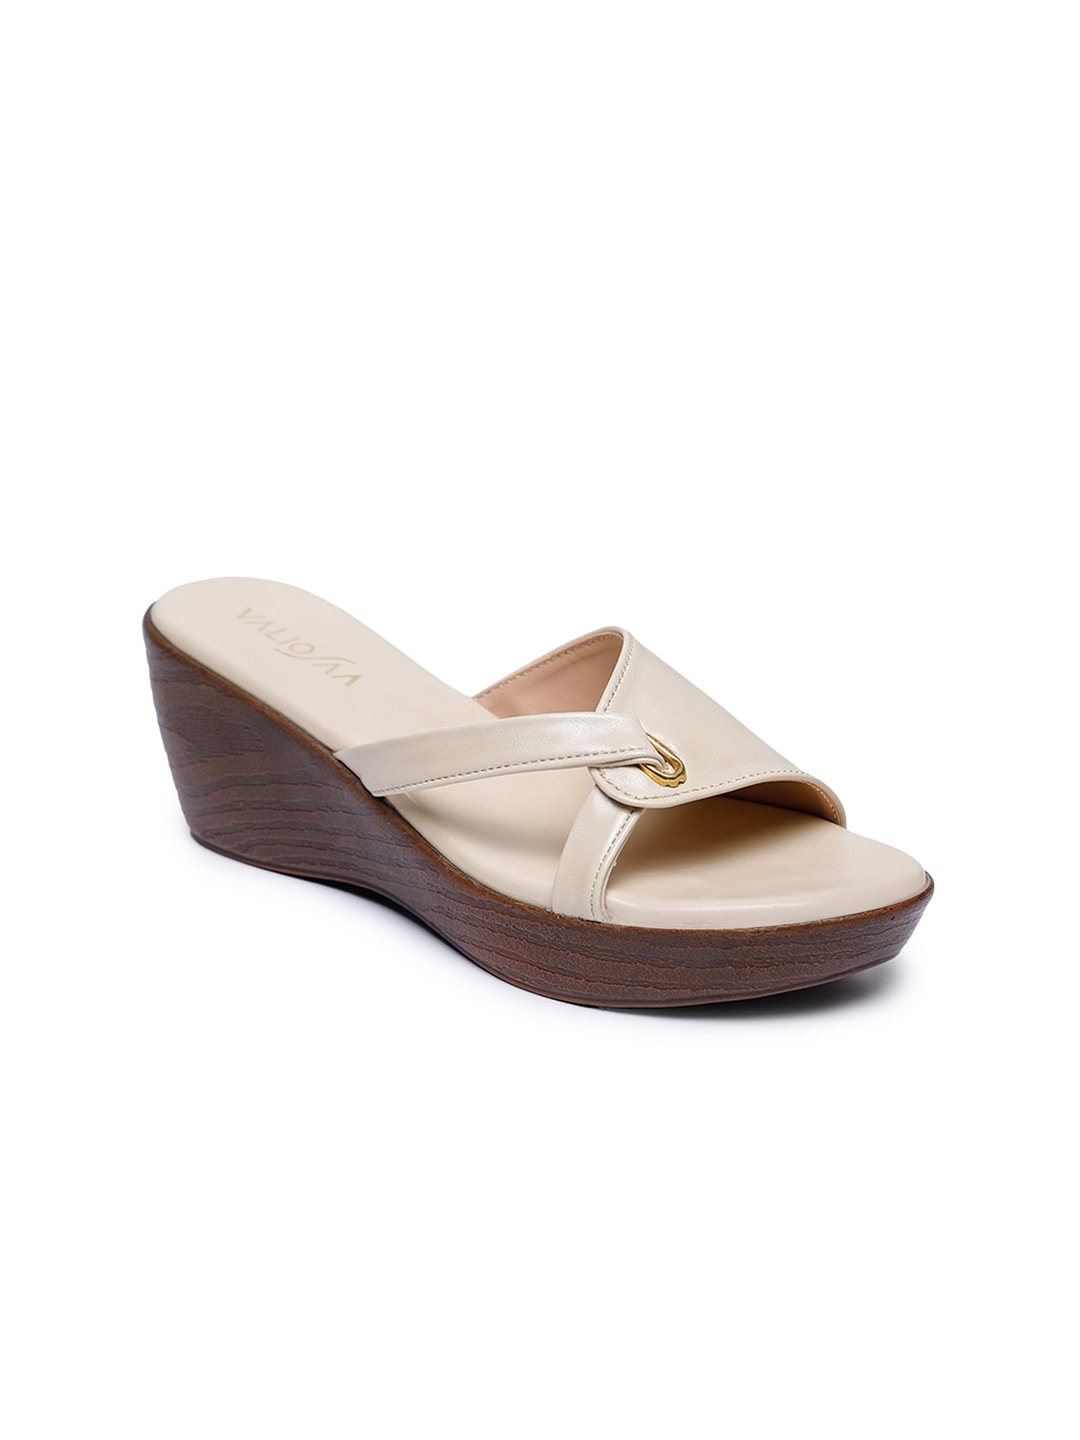 VALIOSAA Cream-Coloured Wedge Heels Price in India